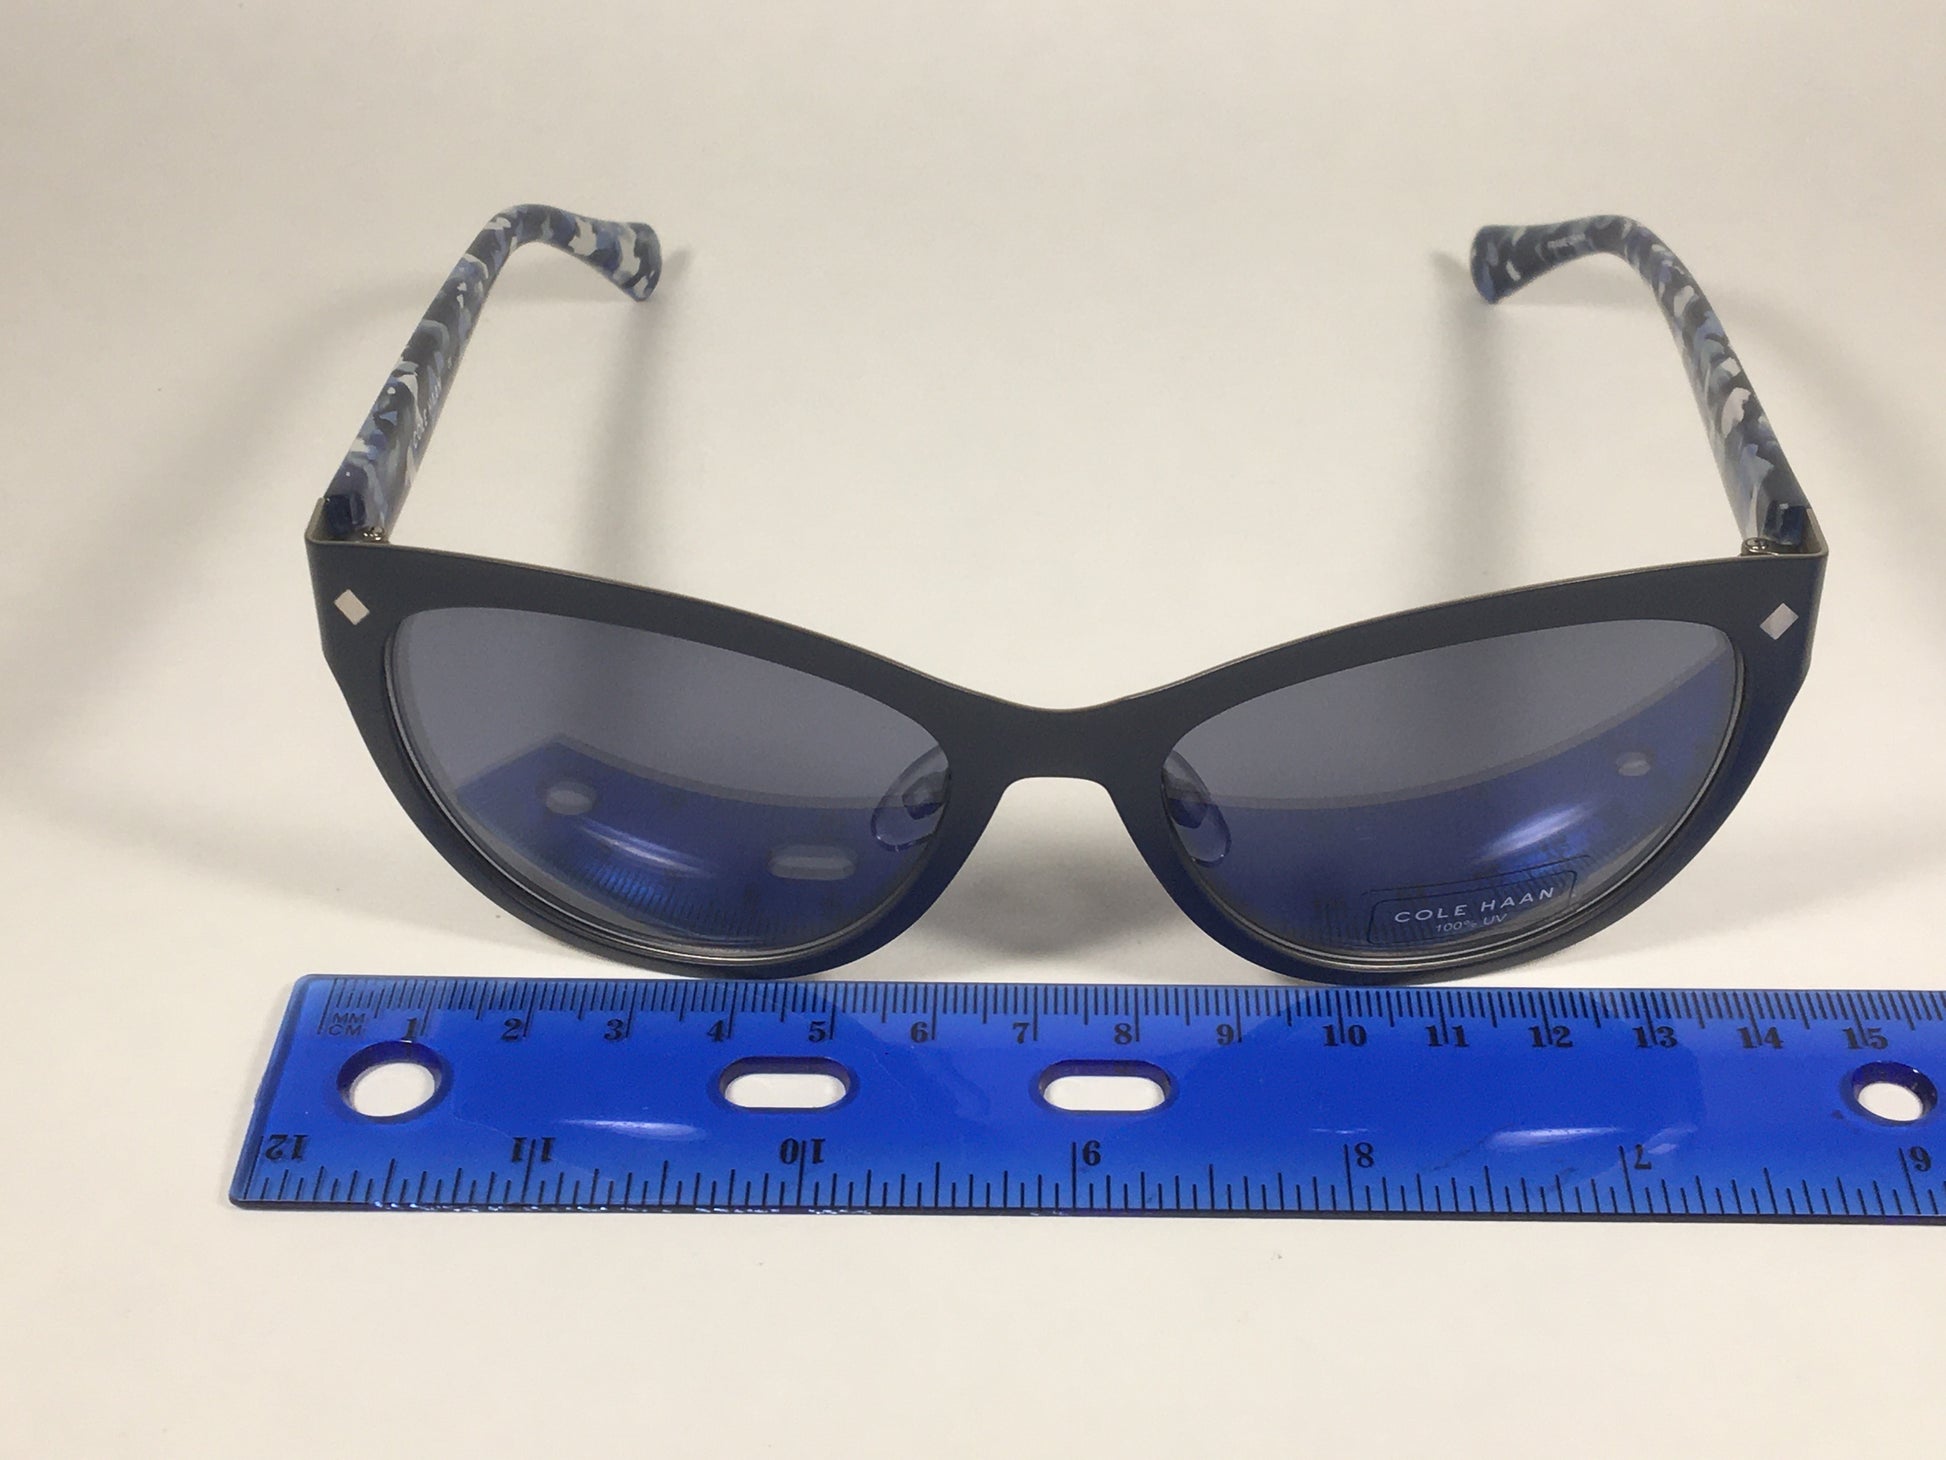 Cole Haan Glasses & Sunglasses